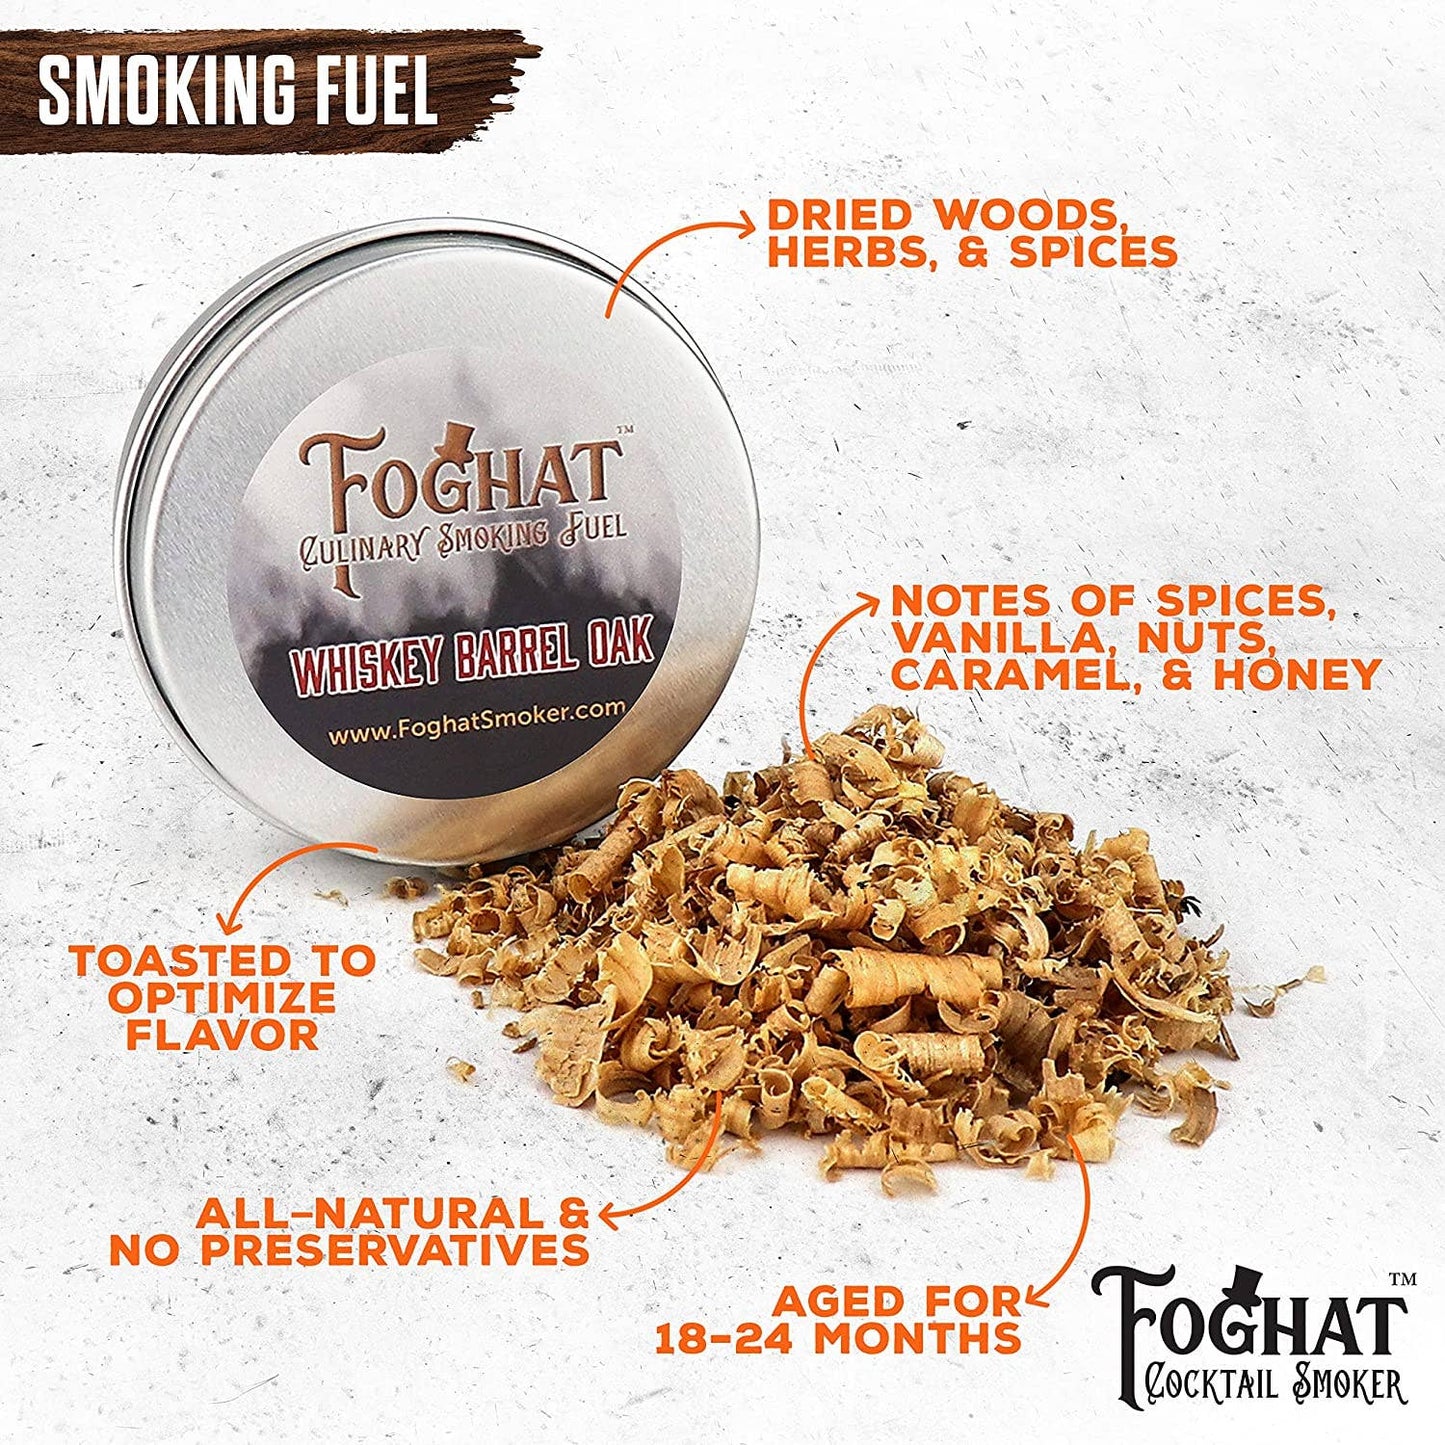 Foghat Cocktail Smoker™